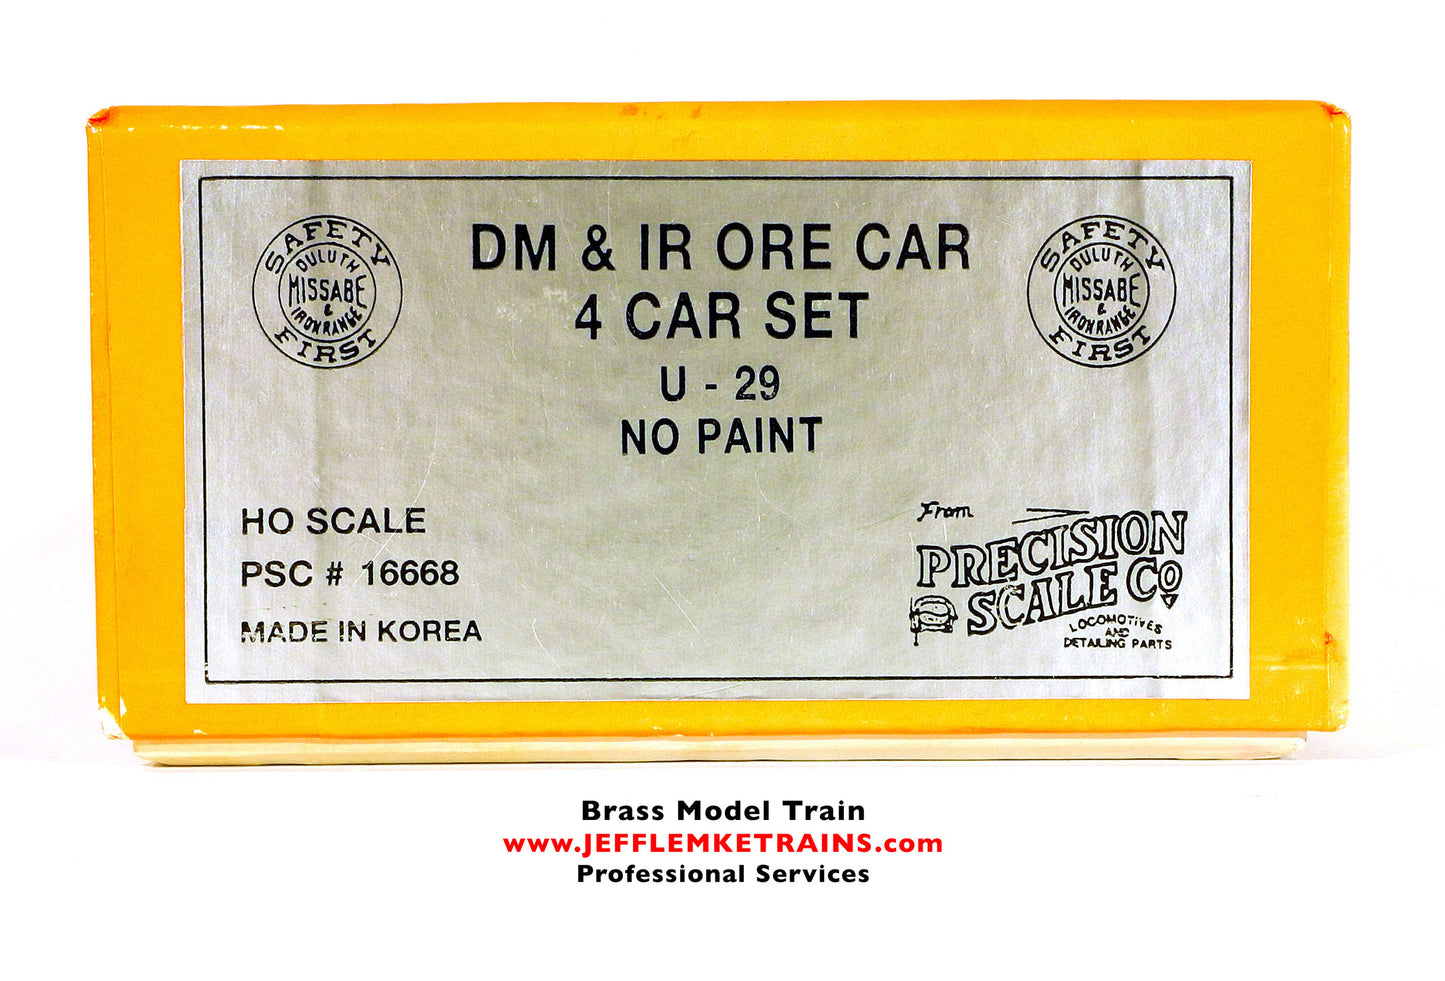 1/87th HO Scale Brass PSC Precision Scale 16668 DM&IR Ore Car 4 Car Set U29 Made in Korea 1997